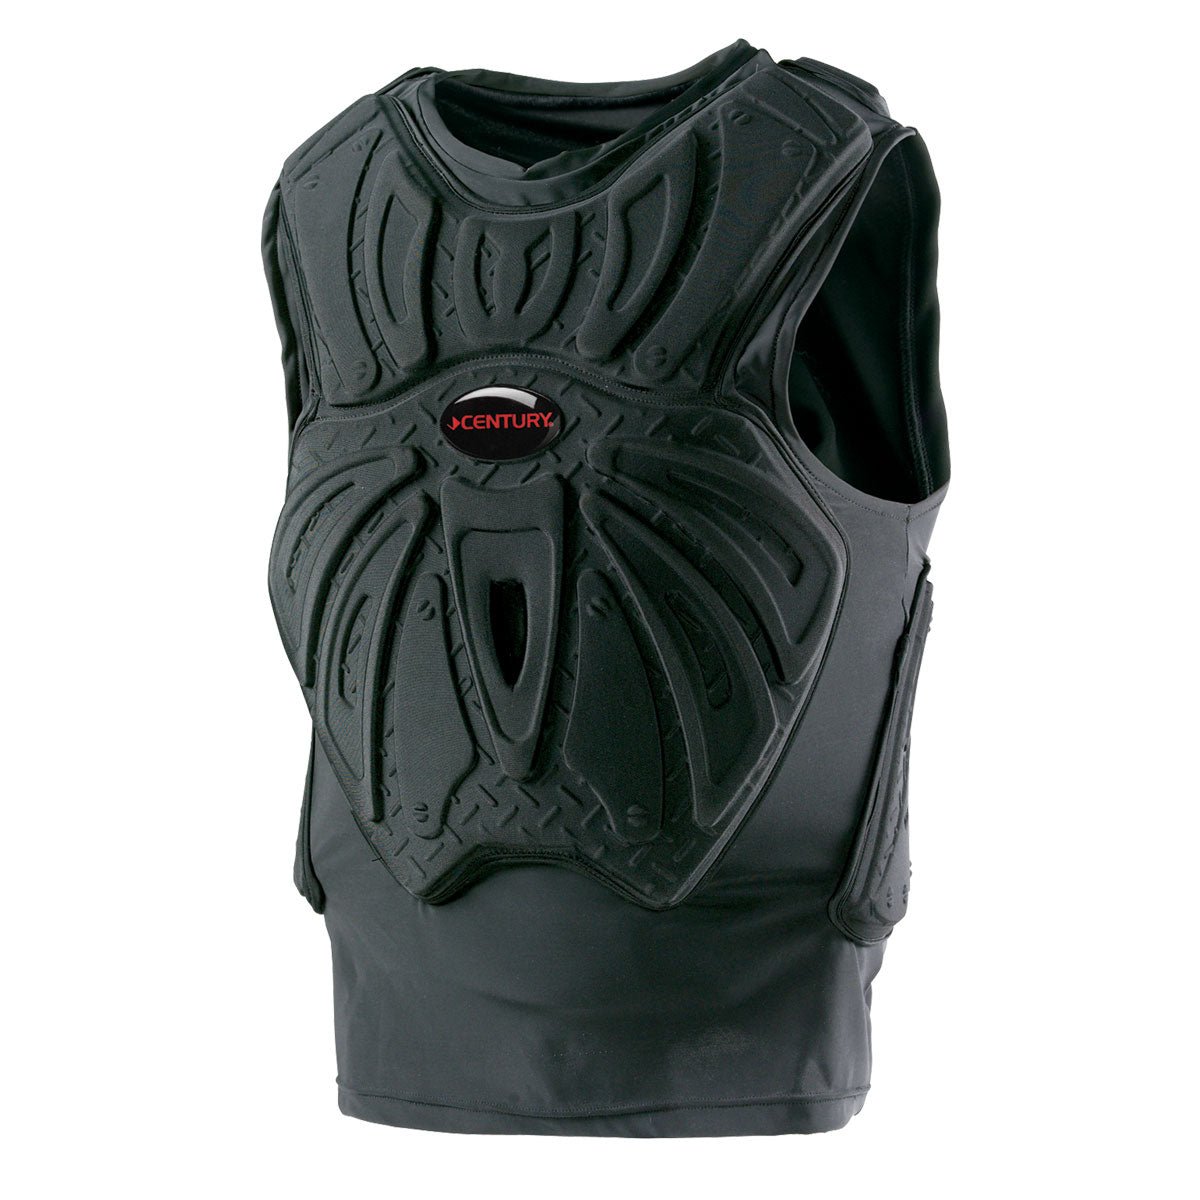 Martial Armor Vest Black